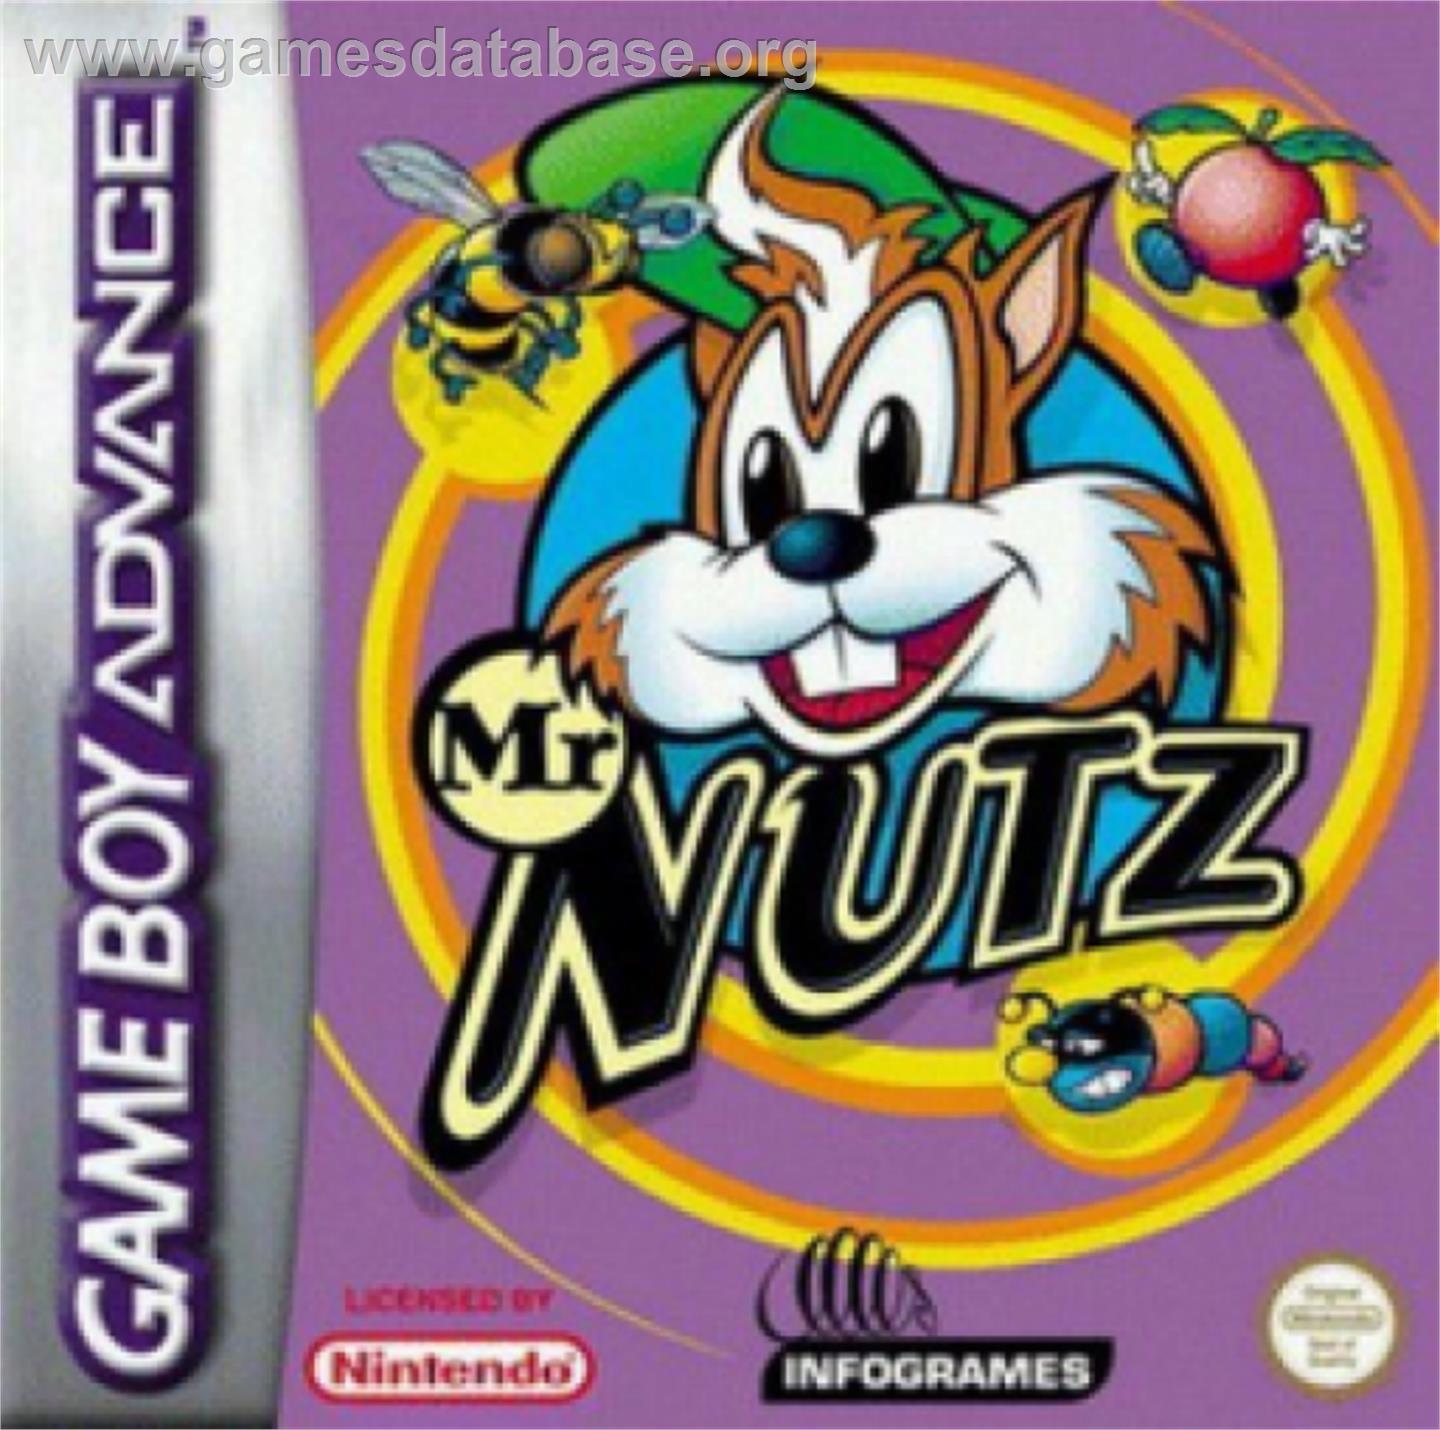 Mr. Nutz - Nintendo Game Boy Advance - Artwork - Box